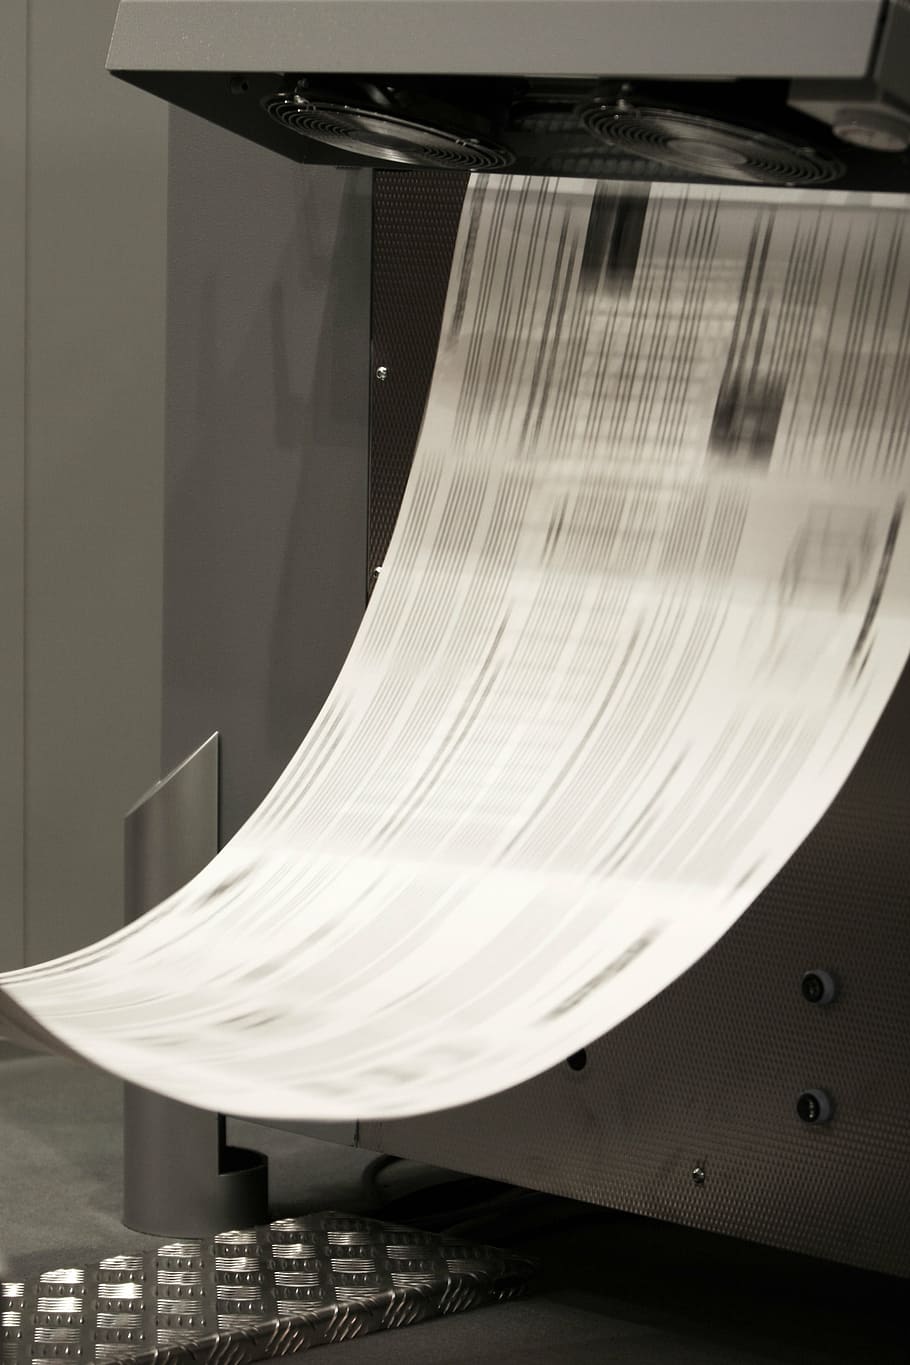 white paper under the machine, pressure, printing, printer, four-color printing